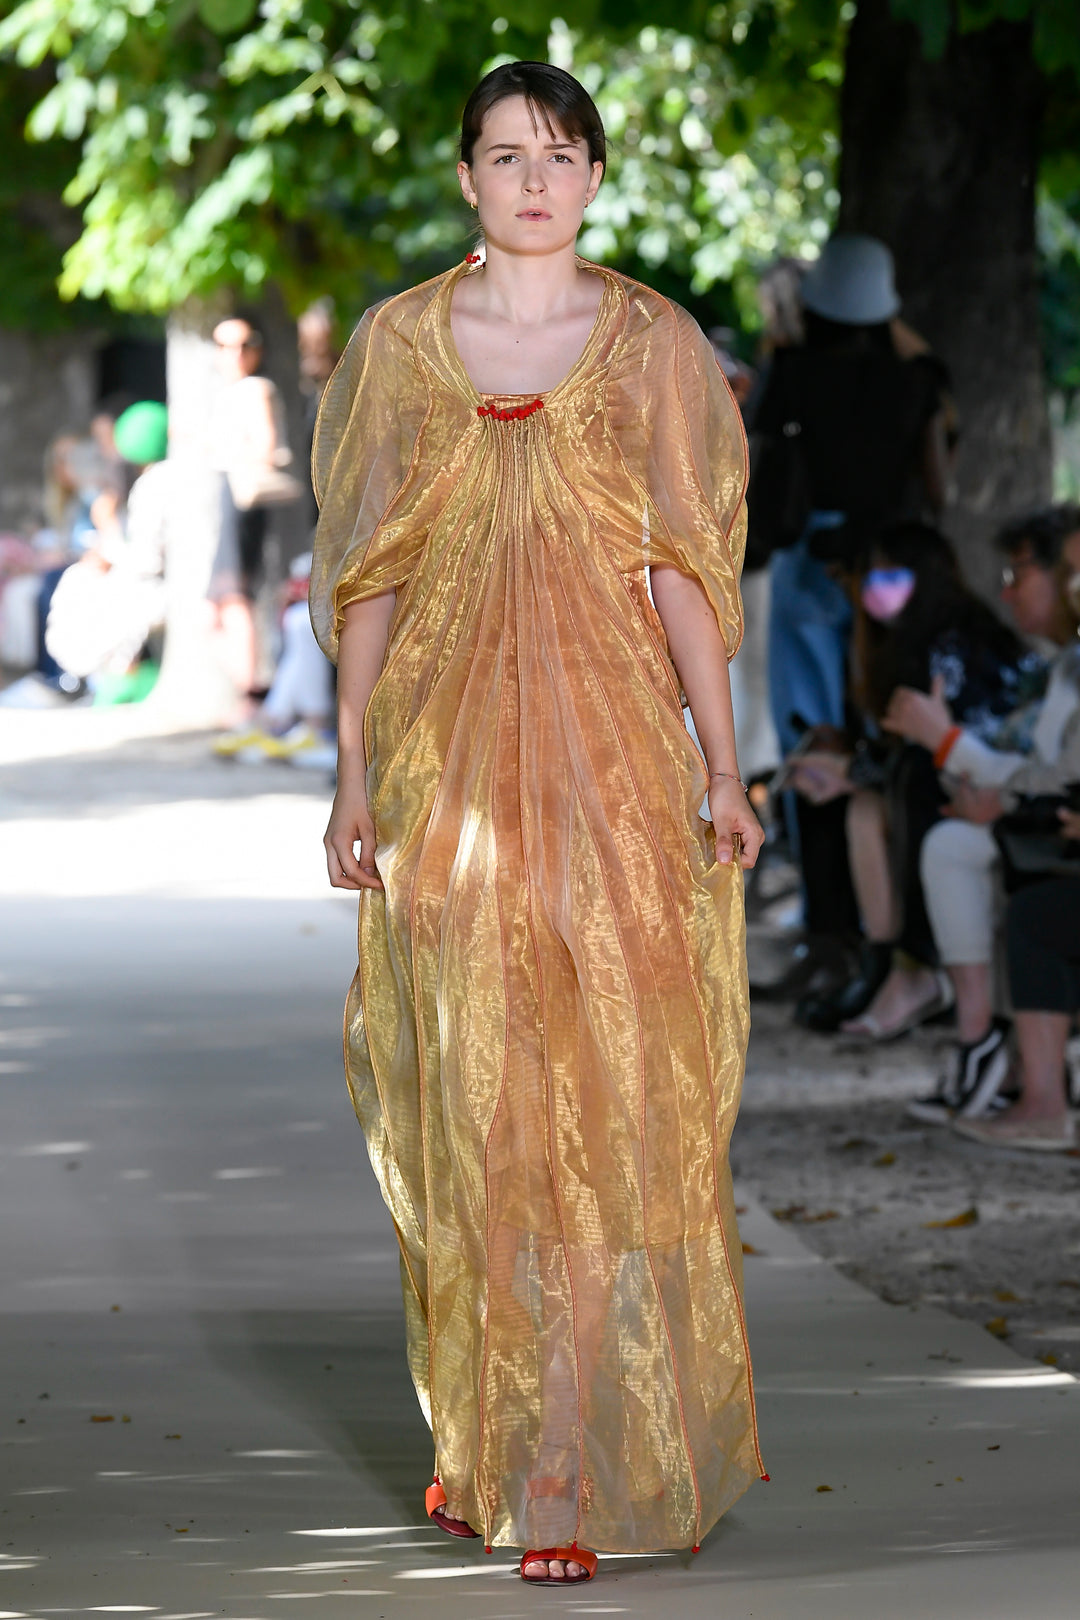 Golden Goddess Dress